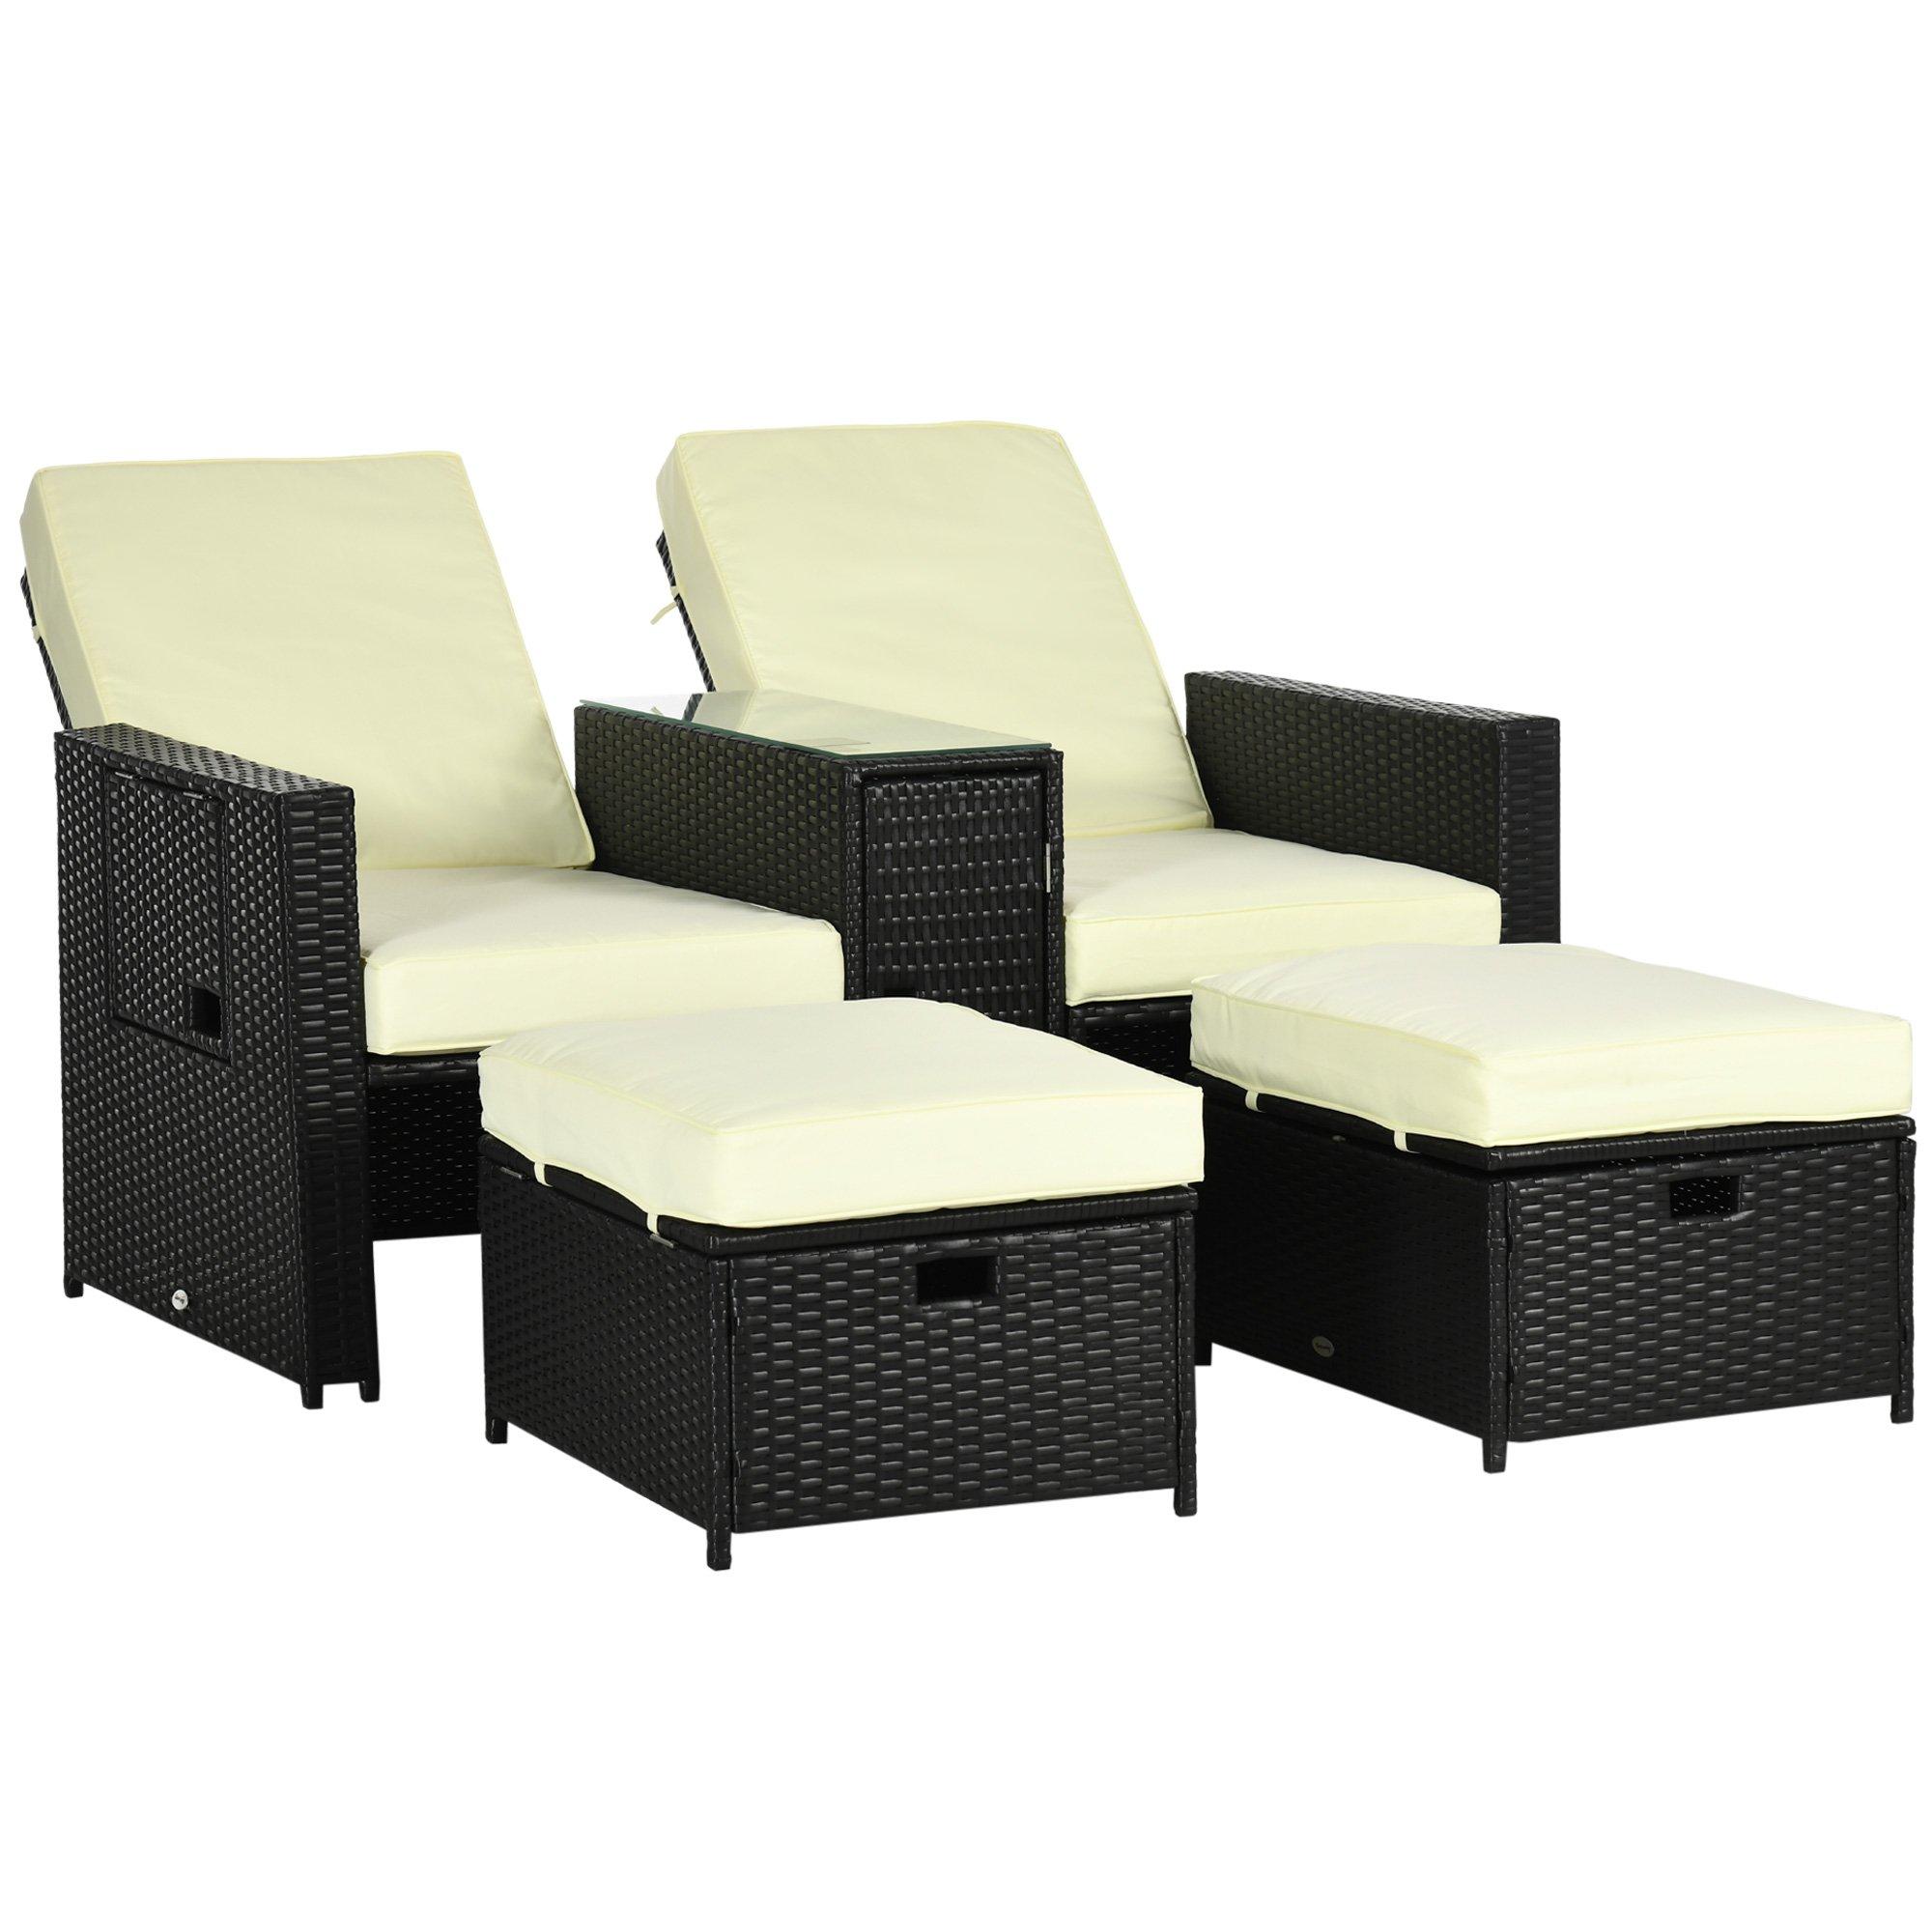 5-level Adjustable Rattan Sun Lounger with Storage Tea Table & Footstools